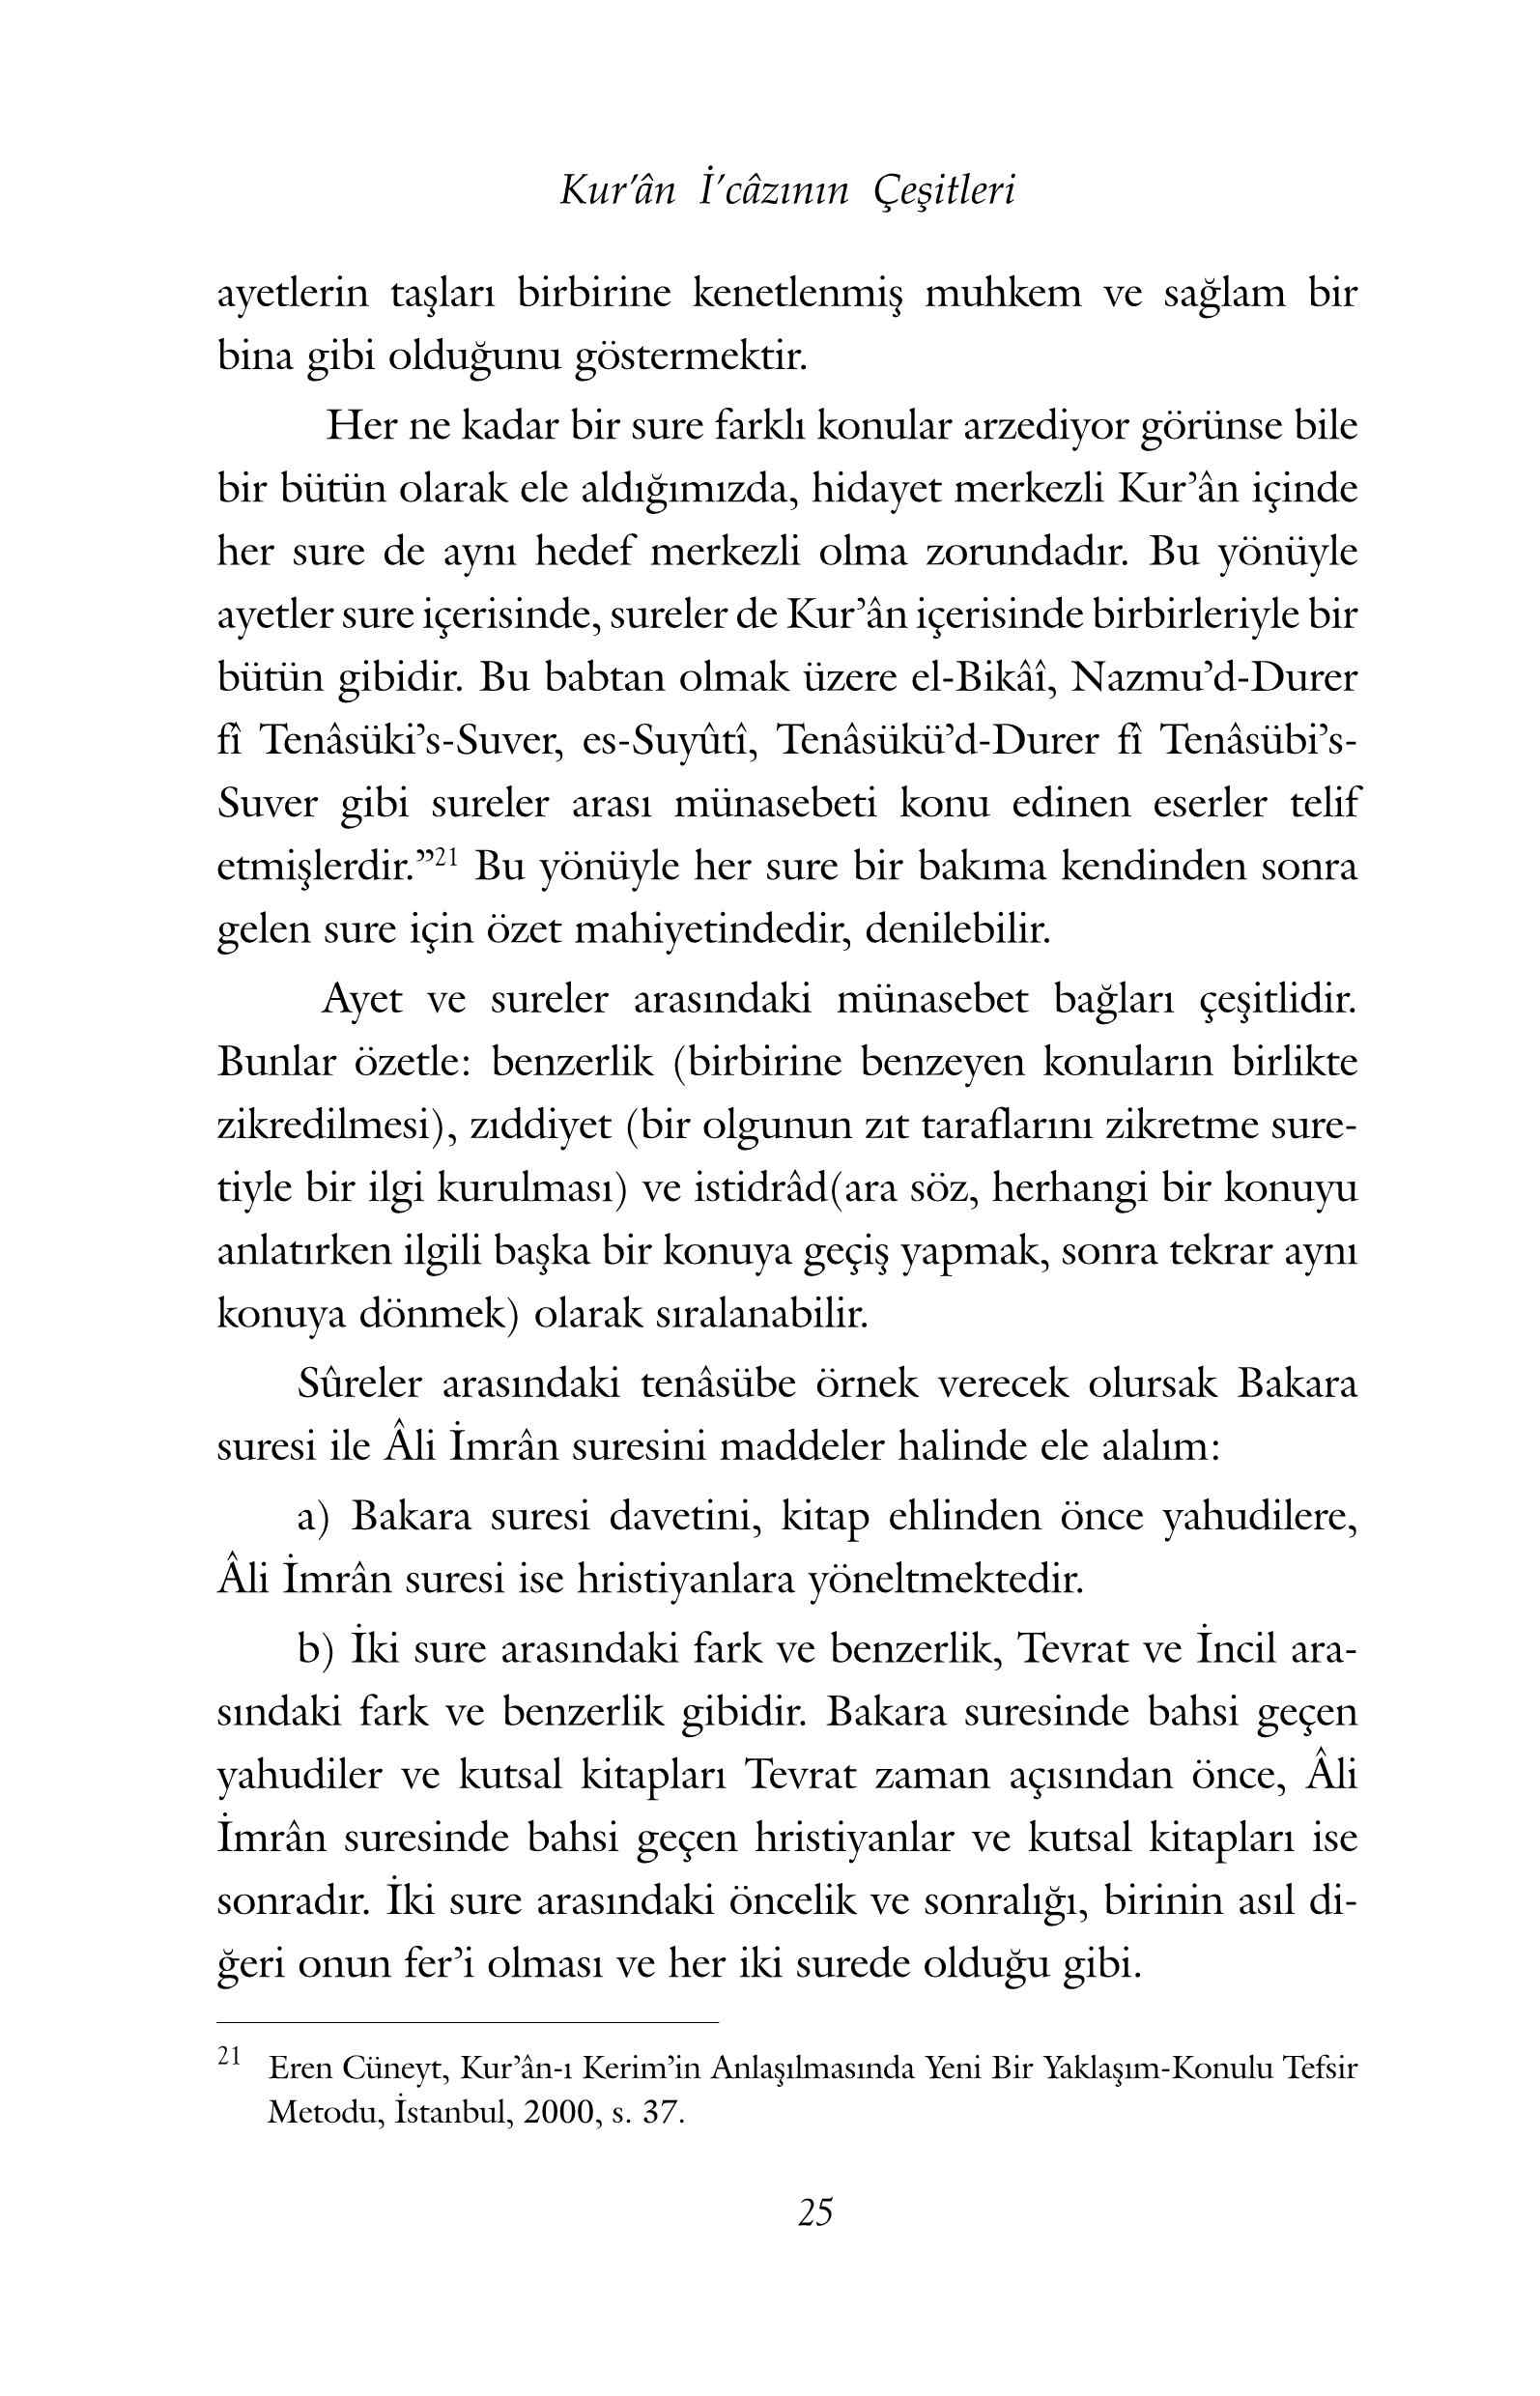 Cuneyt Eren - Kurani Kerimin Essiz Icazi - IsikAkademiY.pdf, 78-Sayfa 